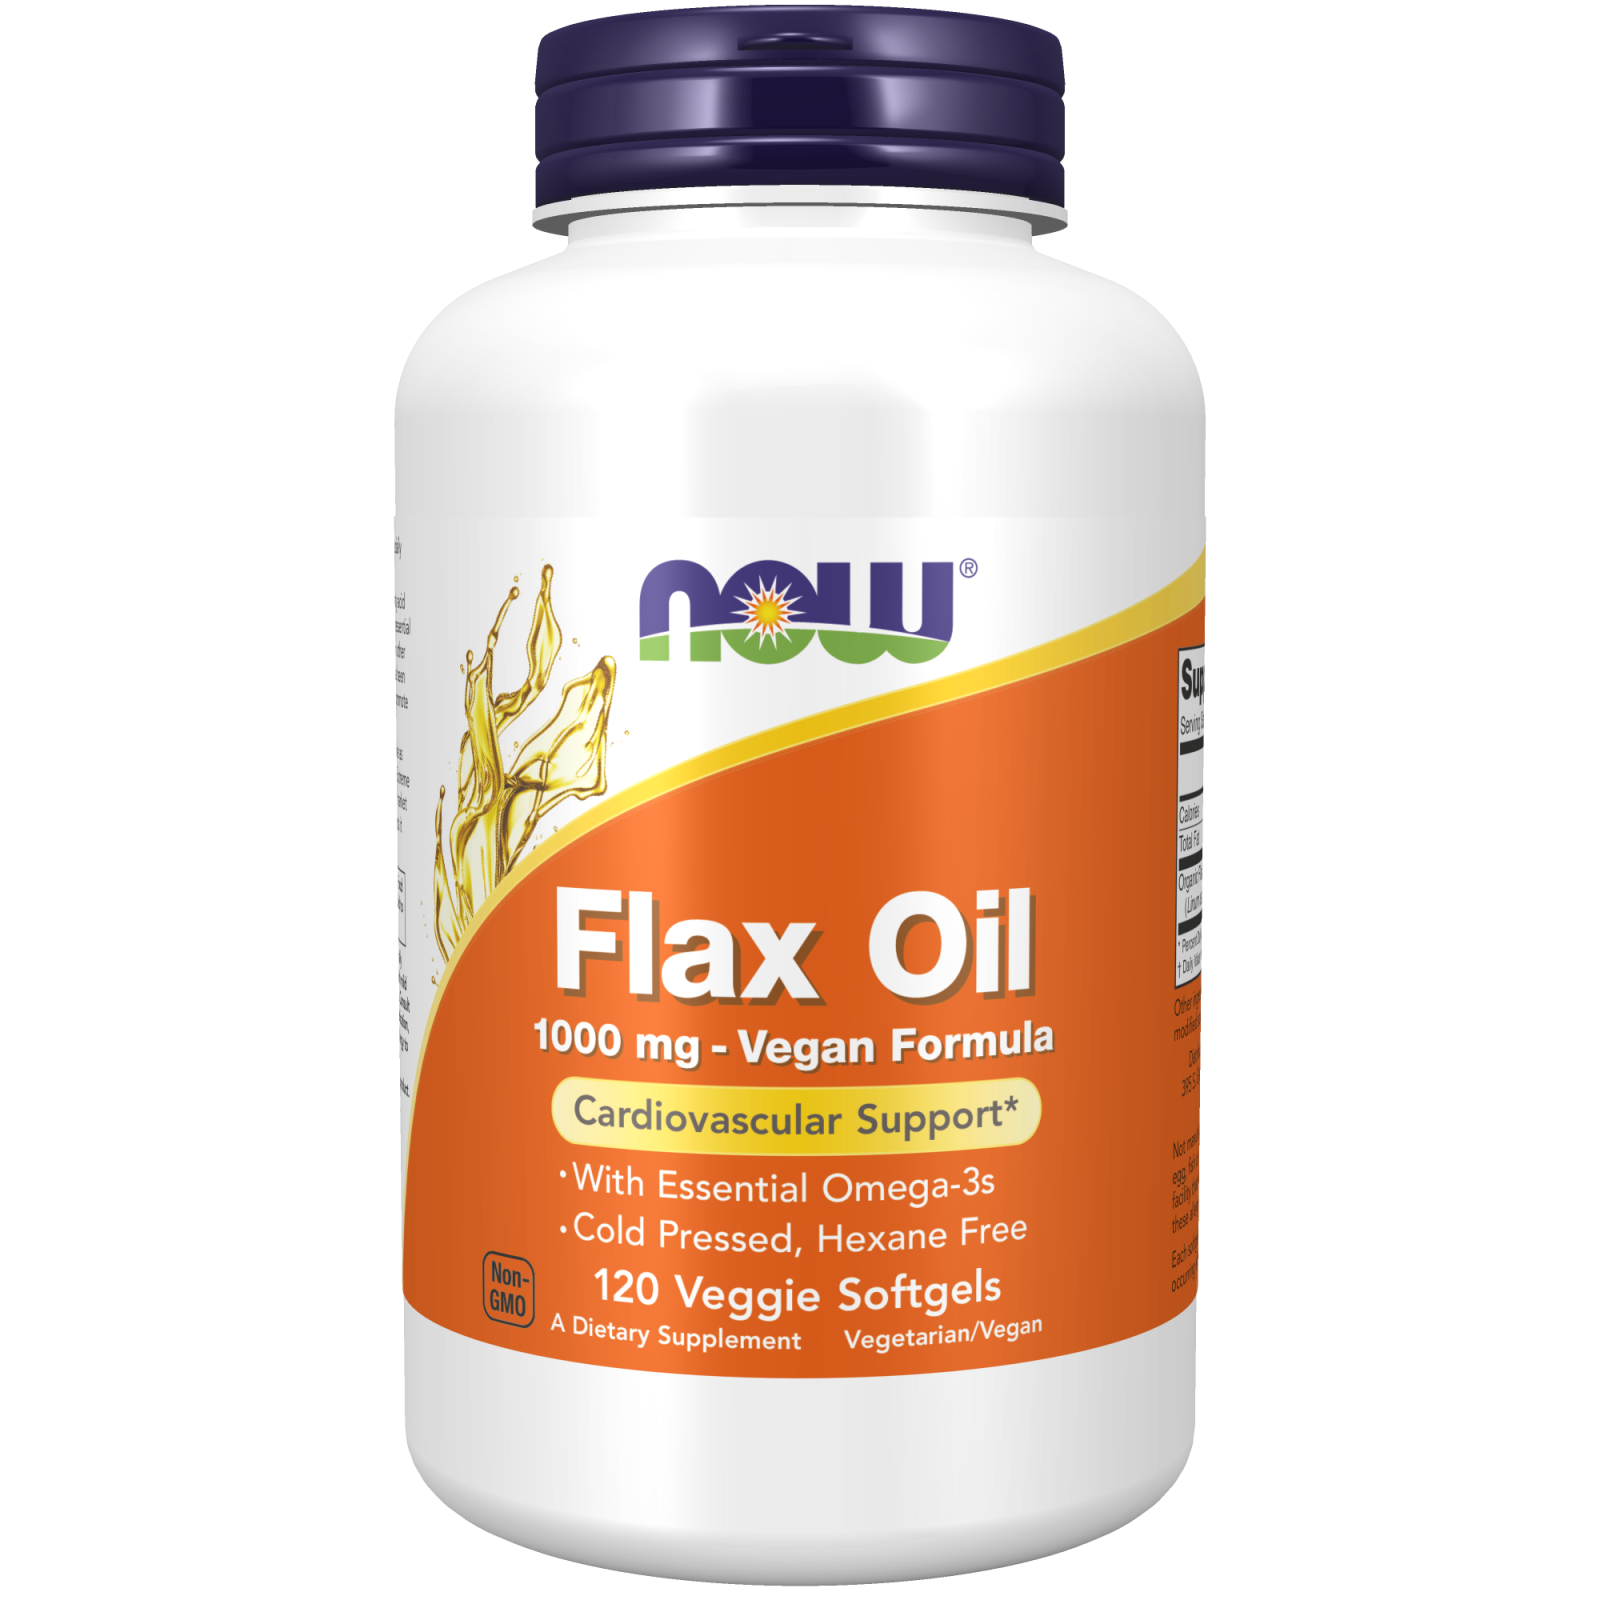 Flax Oil 1000 mg Vegan Formula - 120 Veggie Softgels Bottle Front